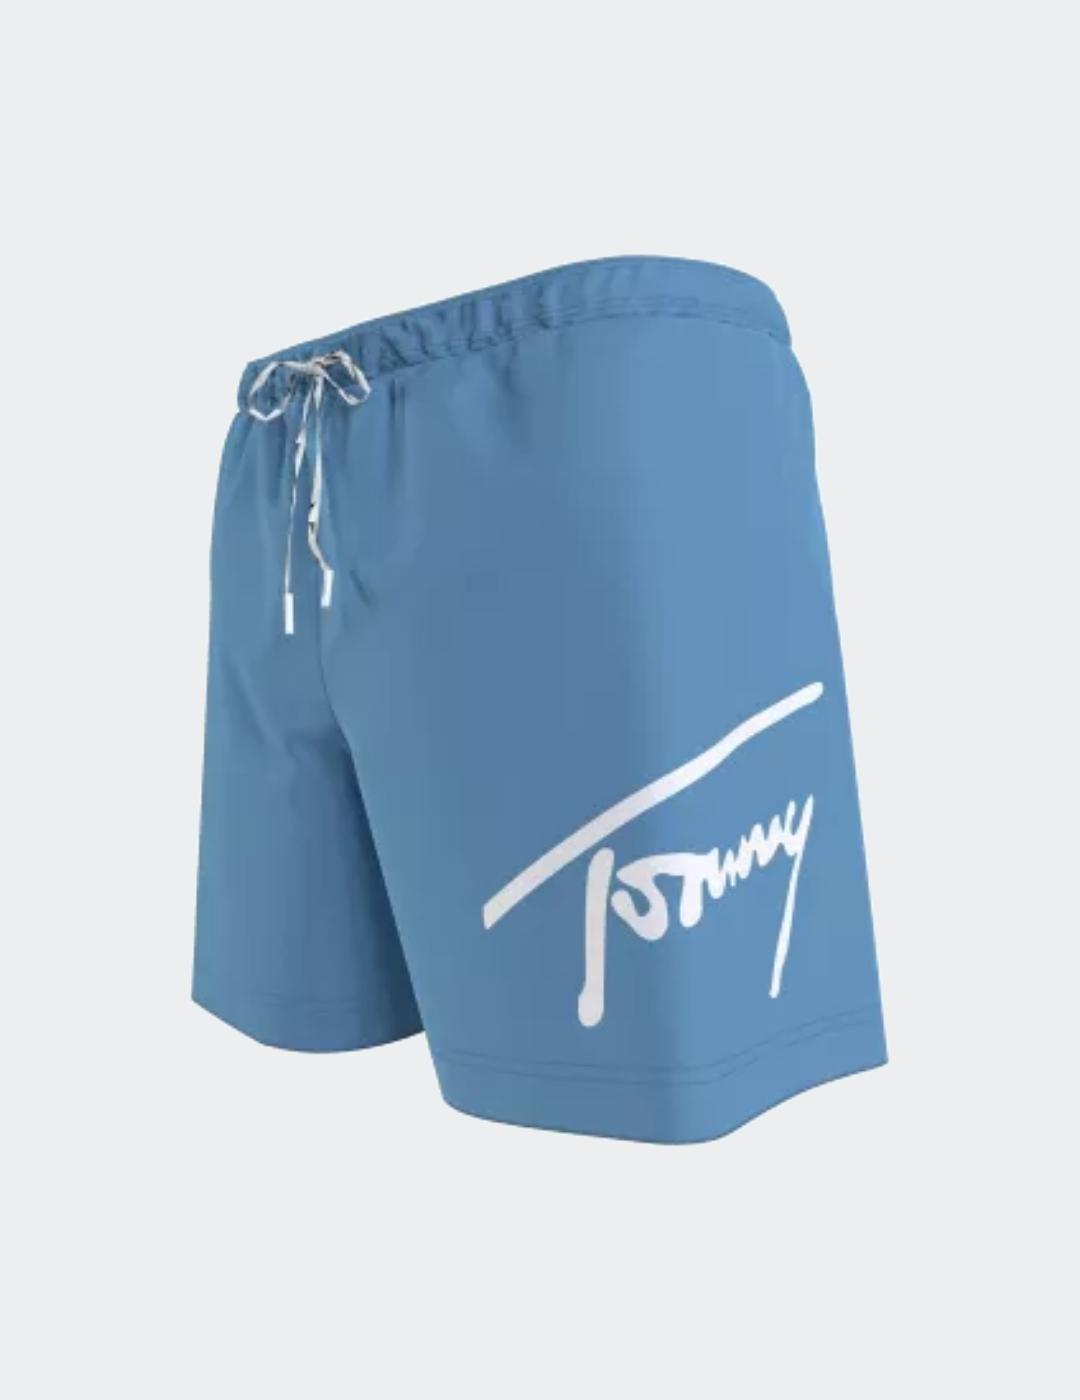 Bañador Tommy Jeans Skysail azul para hombre